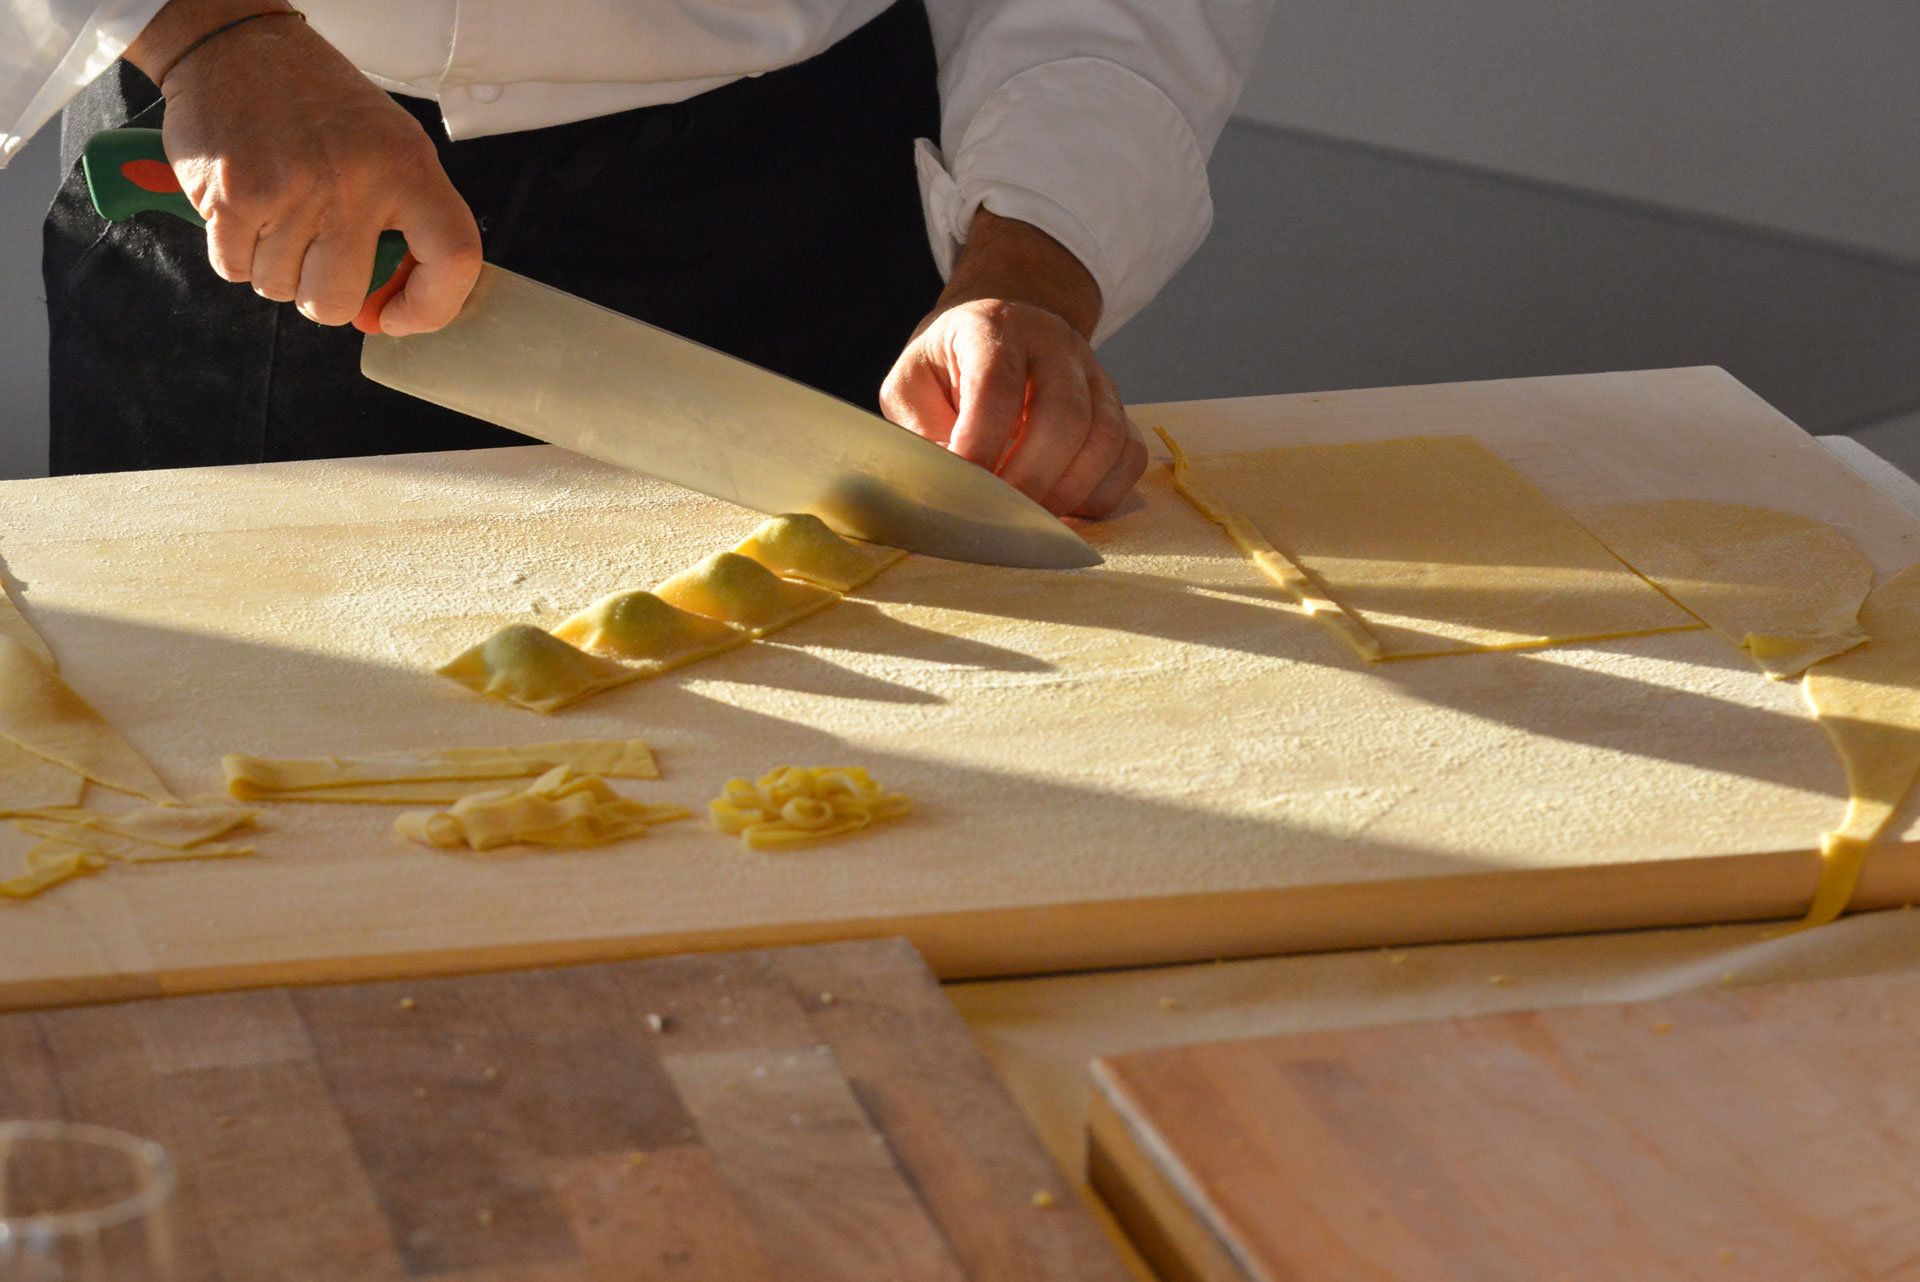 The art of Italian pasta making